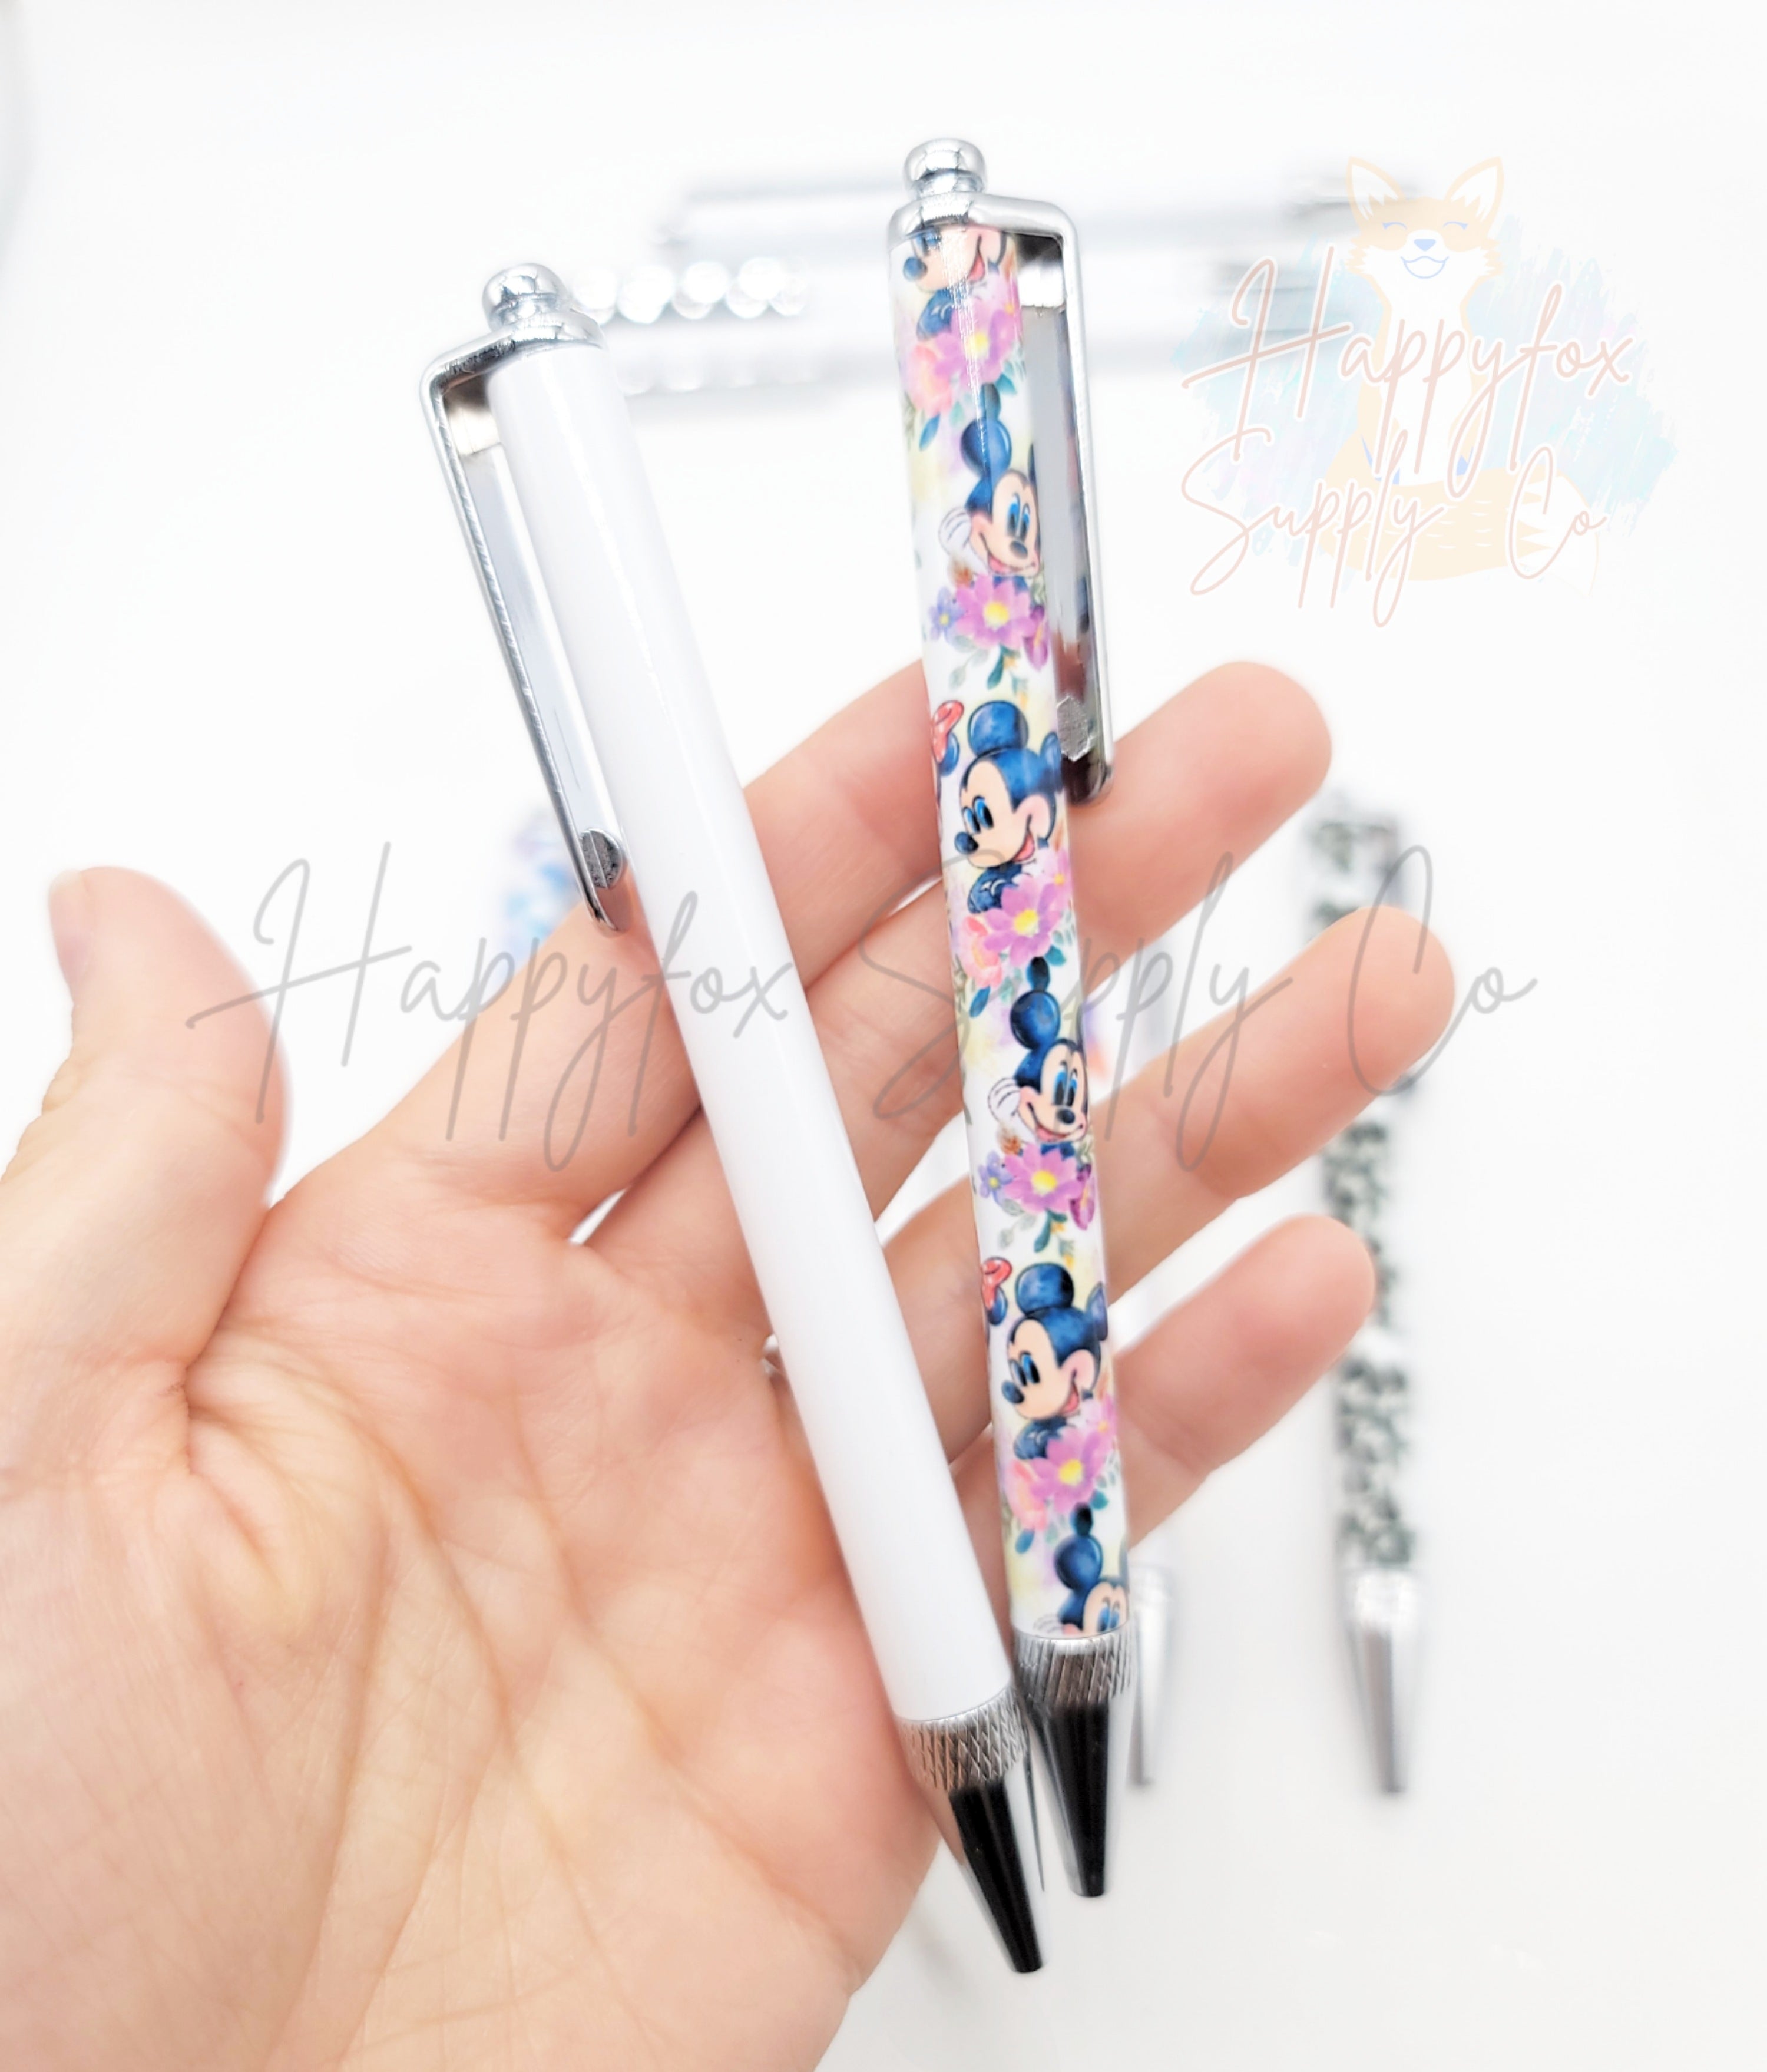 Refillable SUBLIMATION Pen | Silver Ball Point Pen Blanks | Black Ink |  High Quality Pens | Sublimation Pen Blanks | Executive Pens